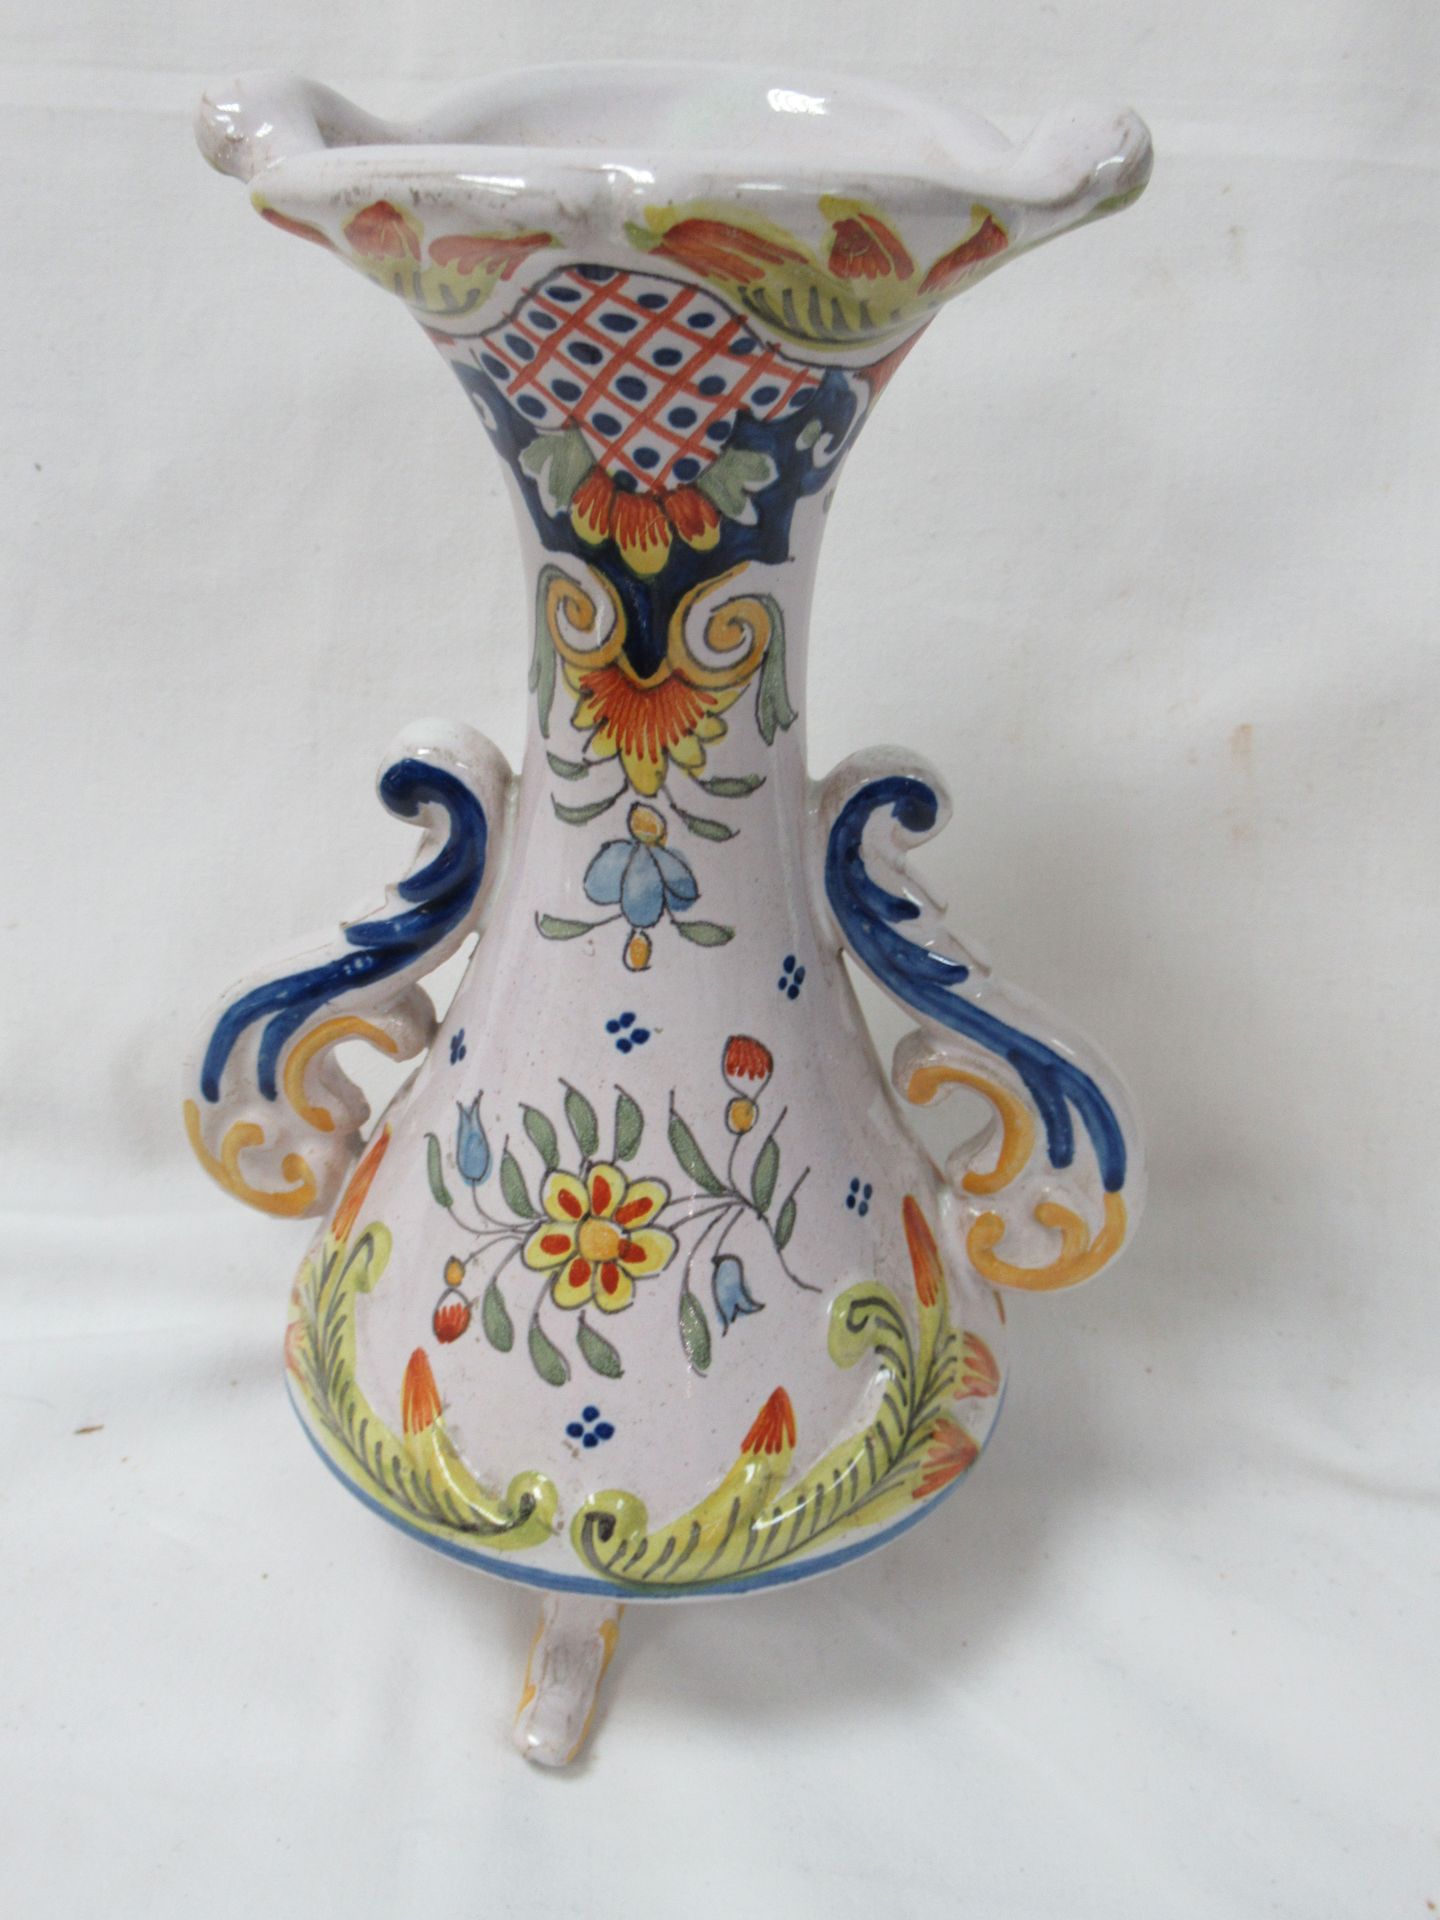 Null Earthenware vase, "Rouen" decoration. Height: 21 cm